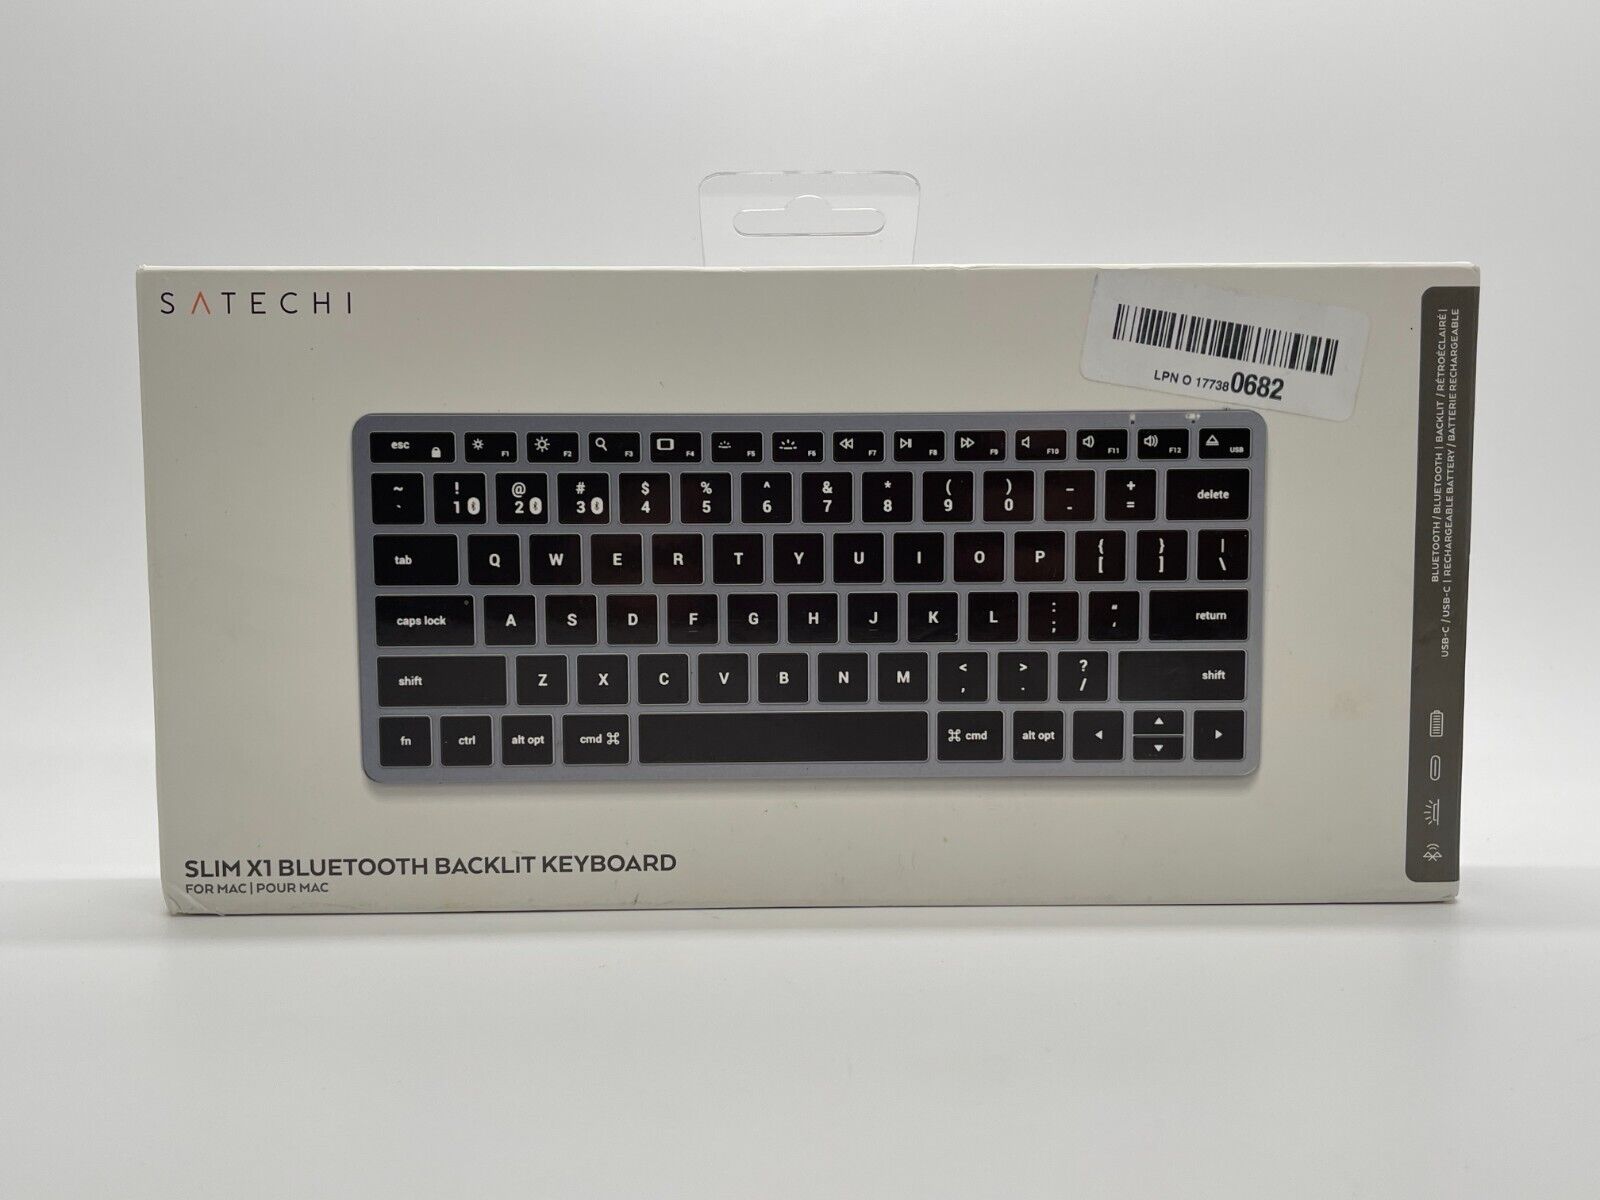 Satechi Slim X1 Compact Bluetooth Backlit Keyboard Model ST-ACBKM